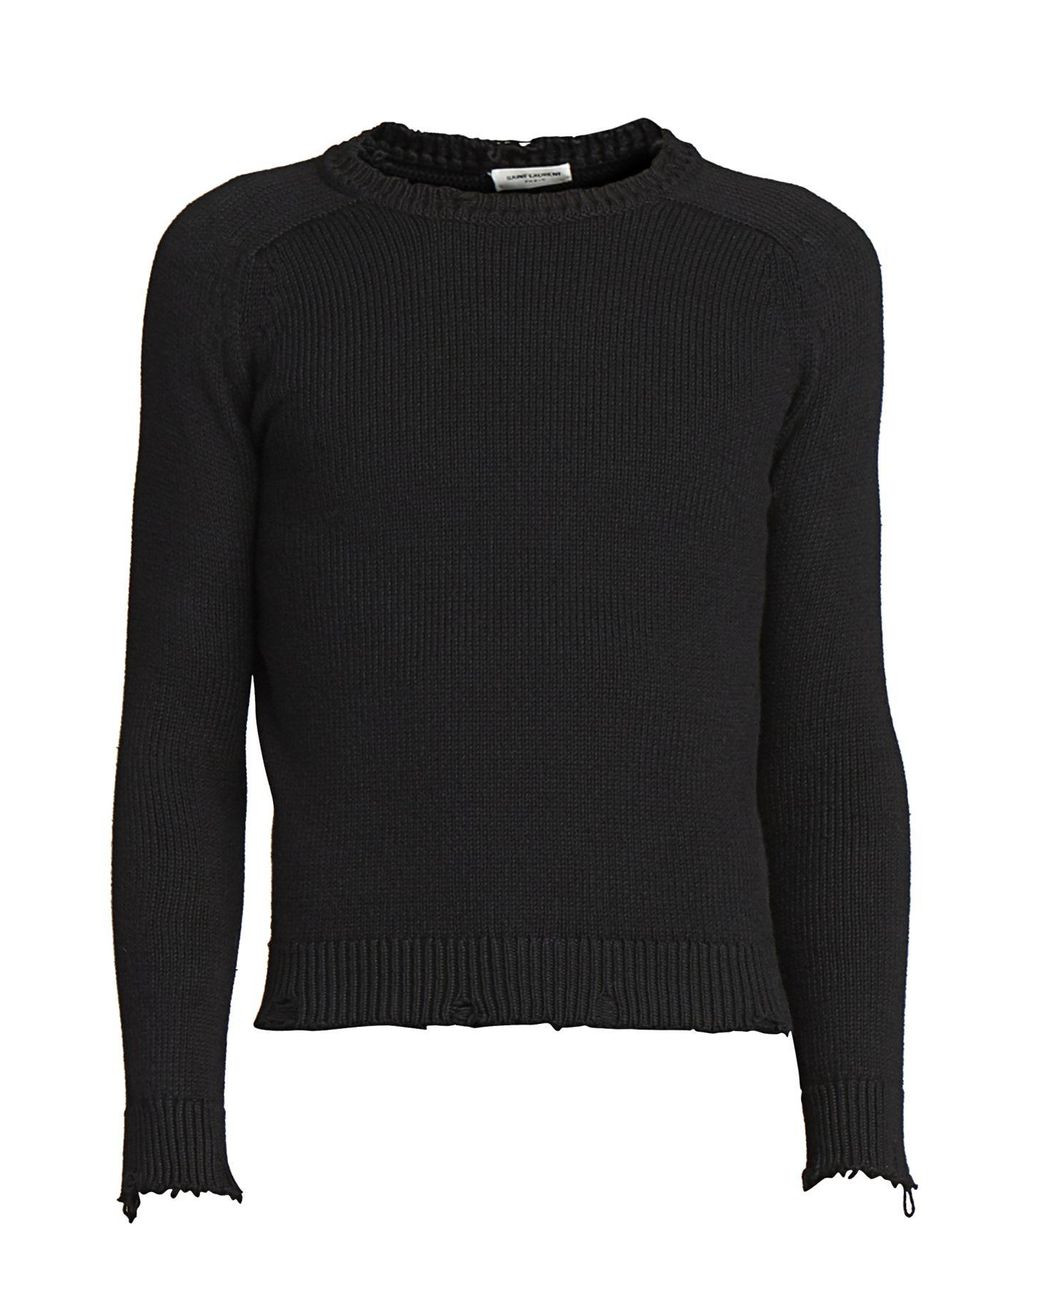 Saint Laurent Distressed Knit Pullover in Black for Men - Lyst